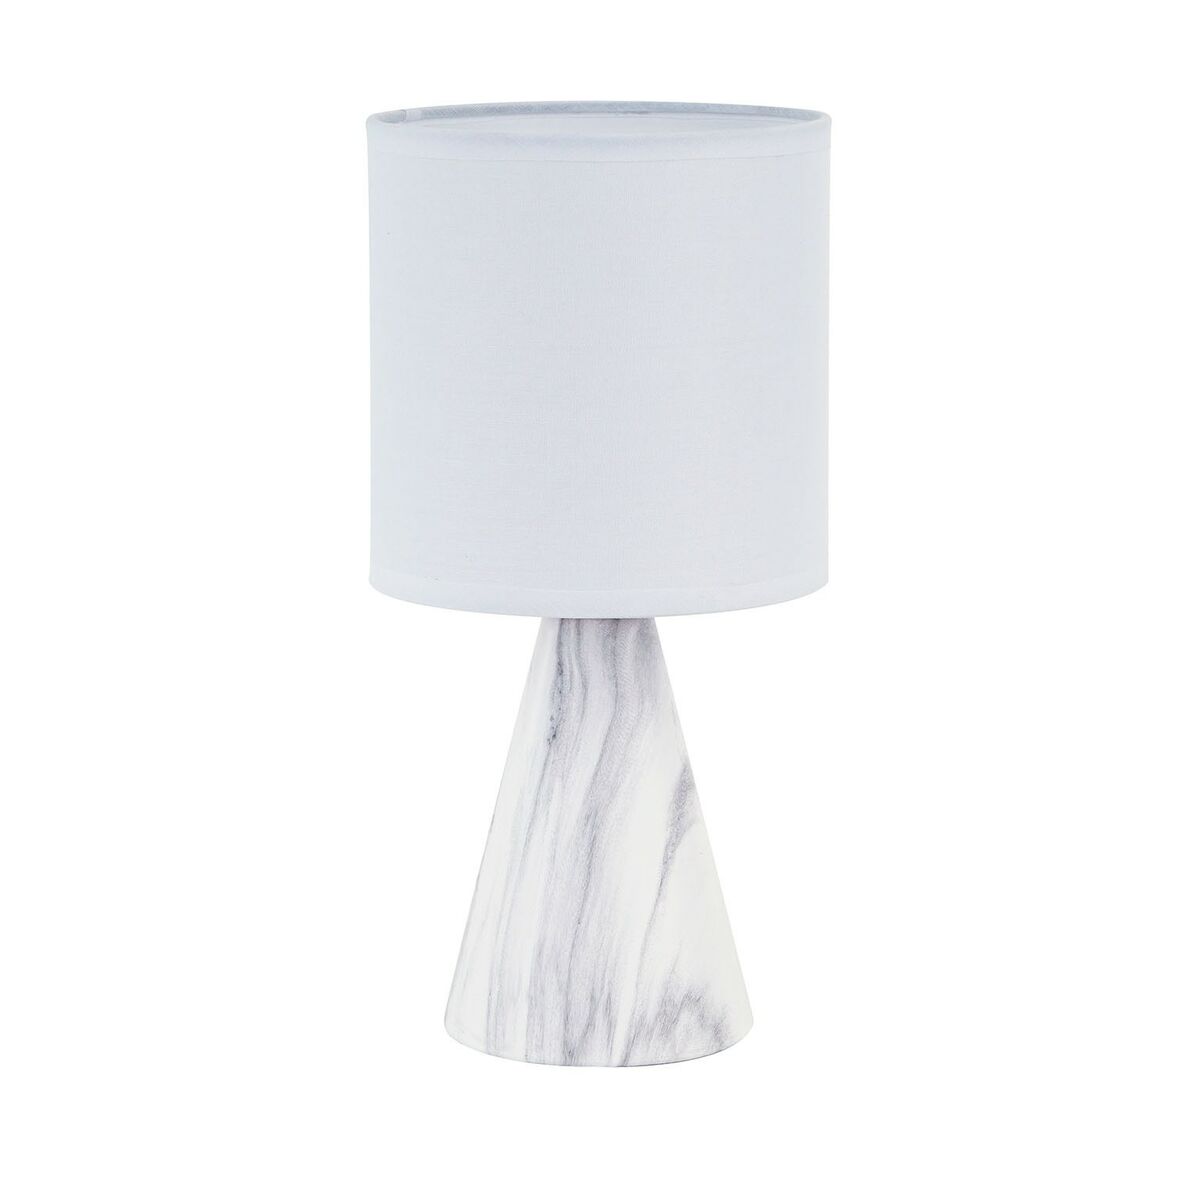 Table lamp white ceramic